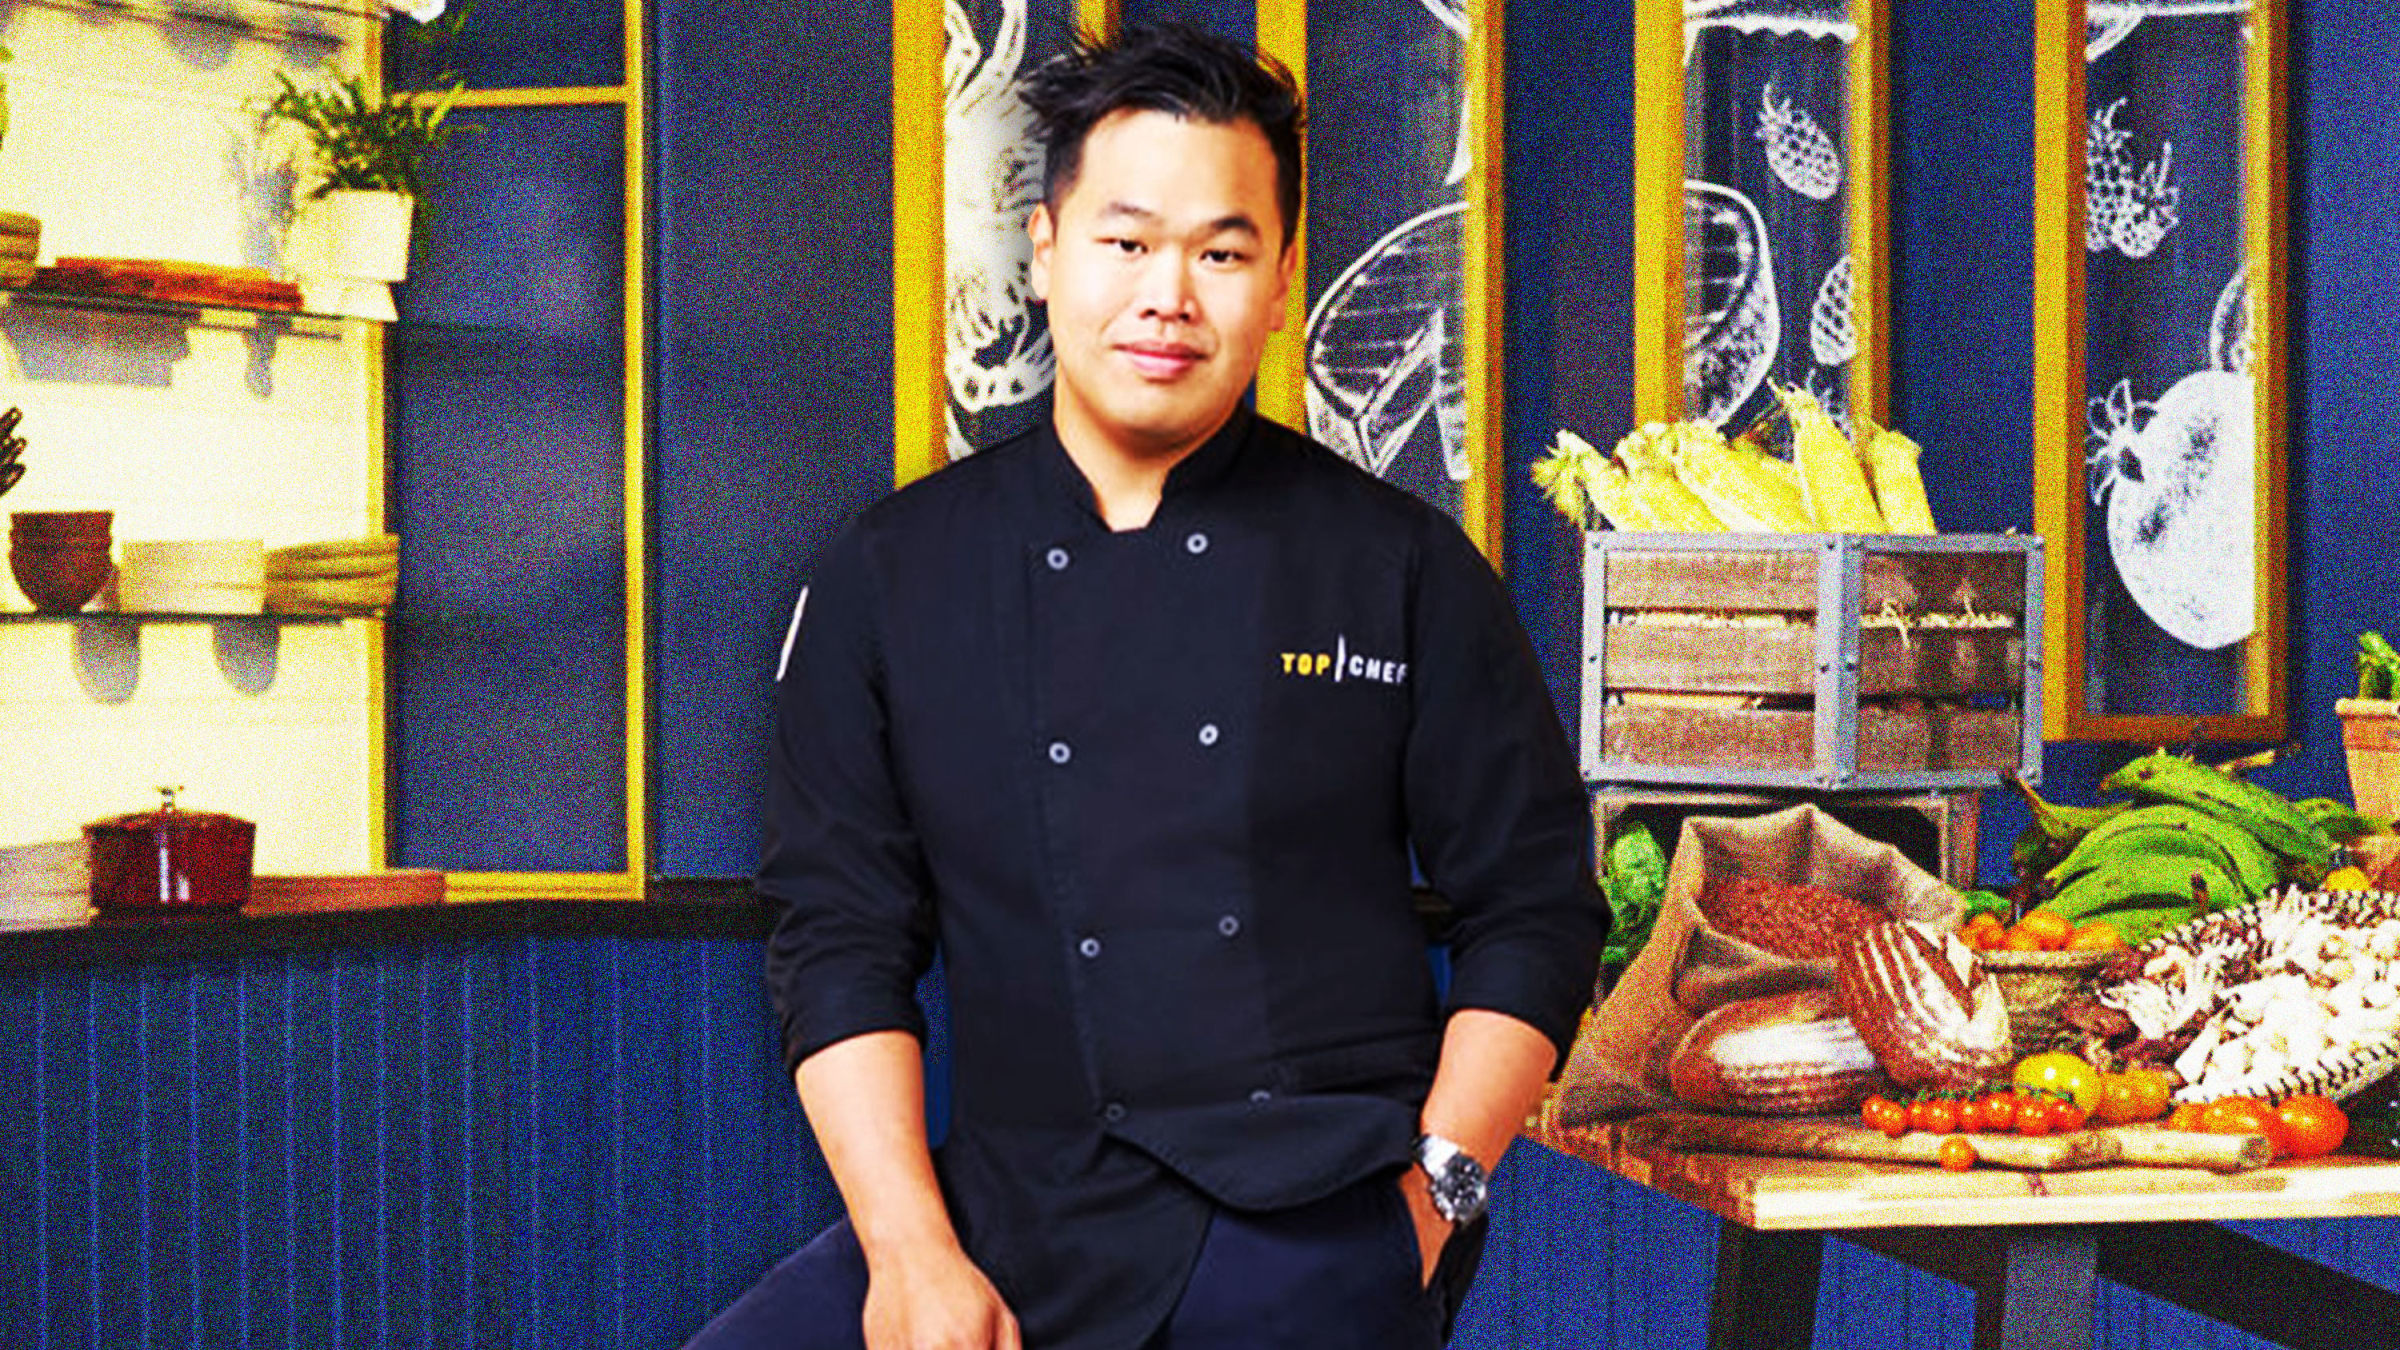 ‘Top Chef’ Winner Buddha Lo on ‘World AllStars’ Season and Getting